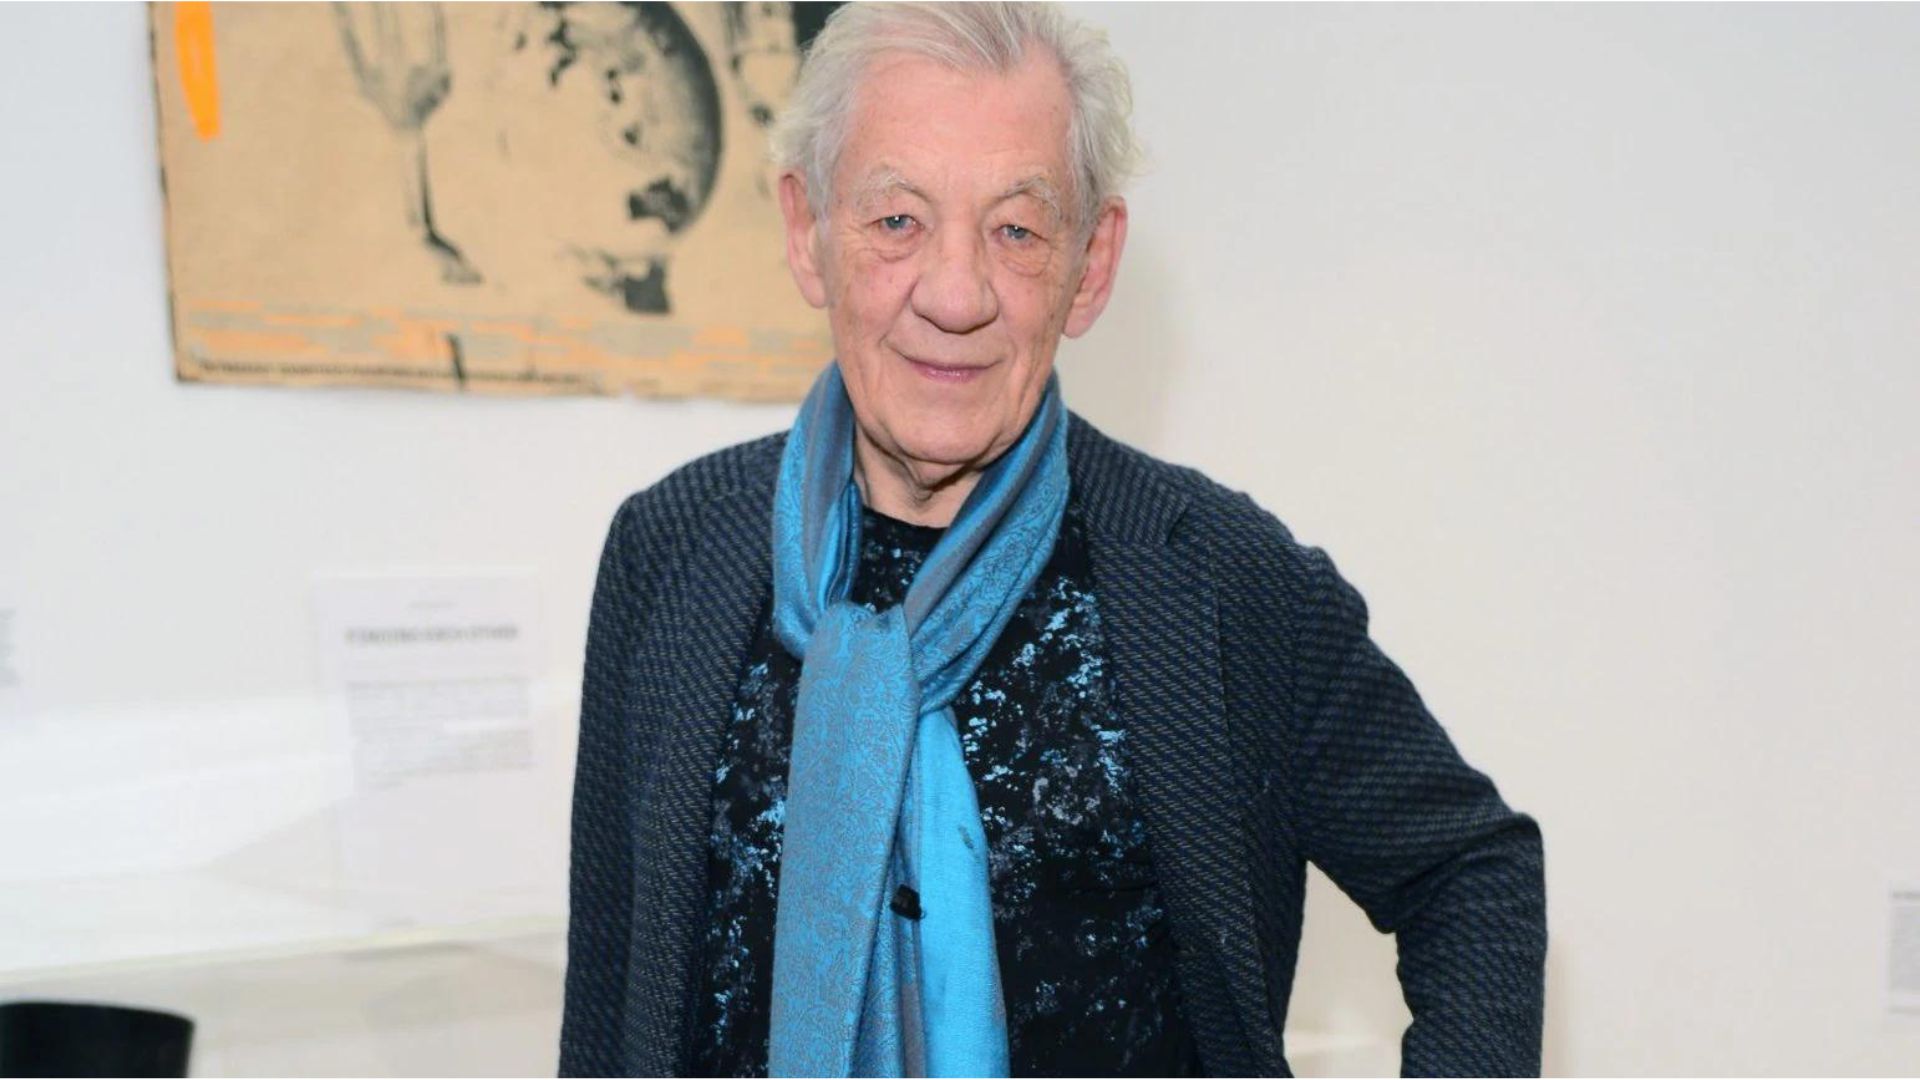 Sir Ian McKellen Standing And Wearing A Blue Scarf